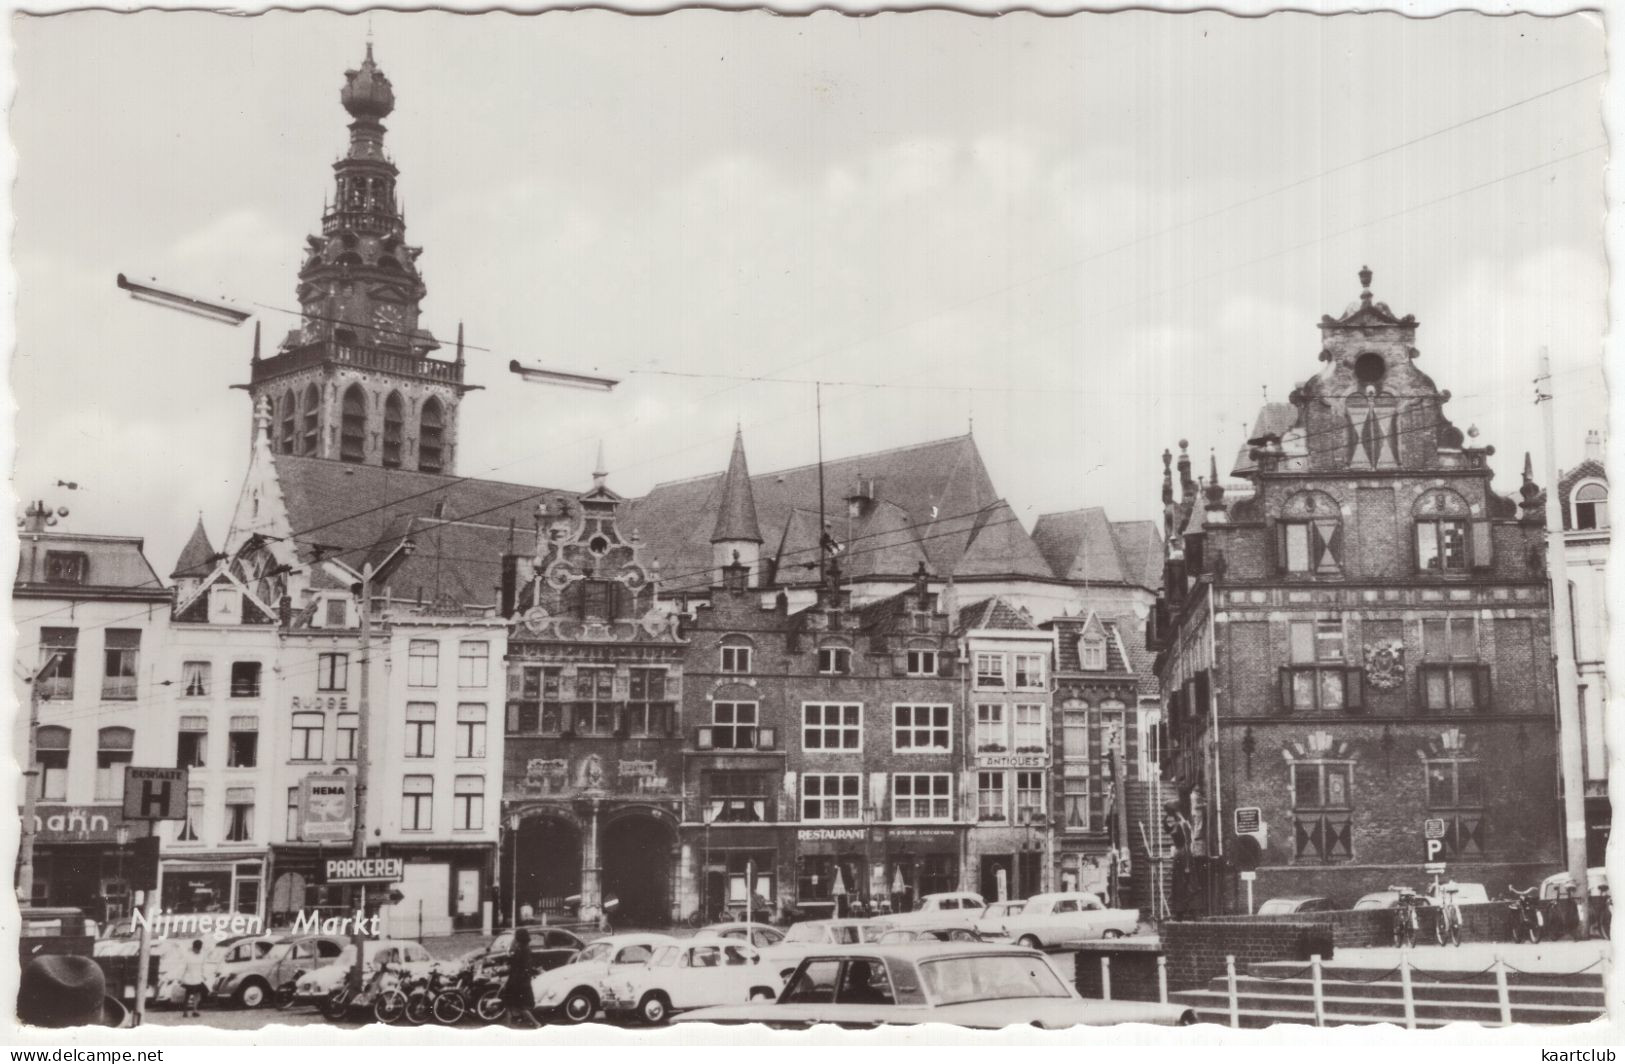 Nijmegen: FORD FAIRLANE '54, TAUNUS P2, FIAT 600, VW 1200 KÄFER/COX, CITROËN 2CV, SOLEX - Markt - (Holland) - PKW